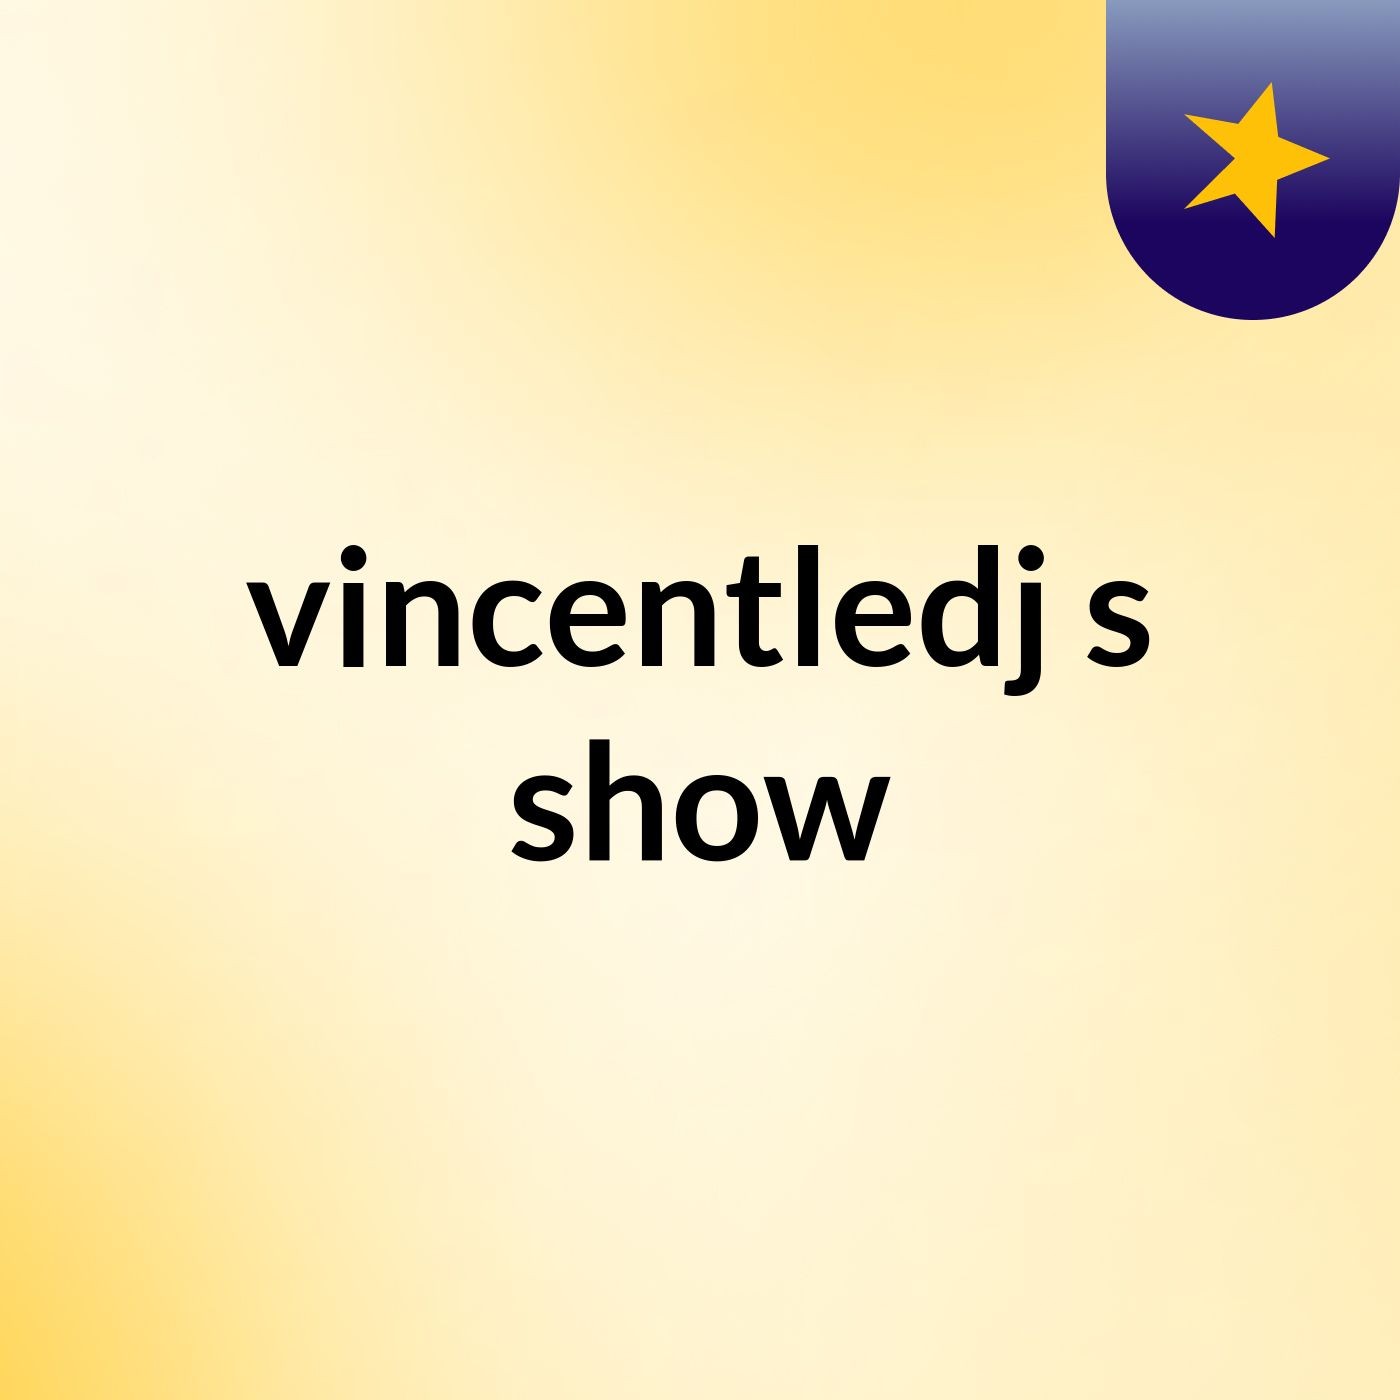 vincentledj's show